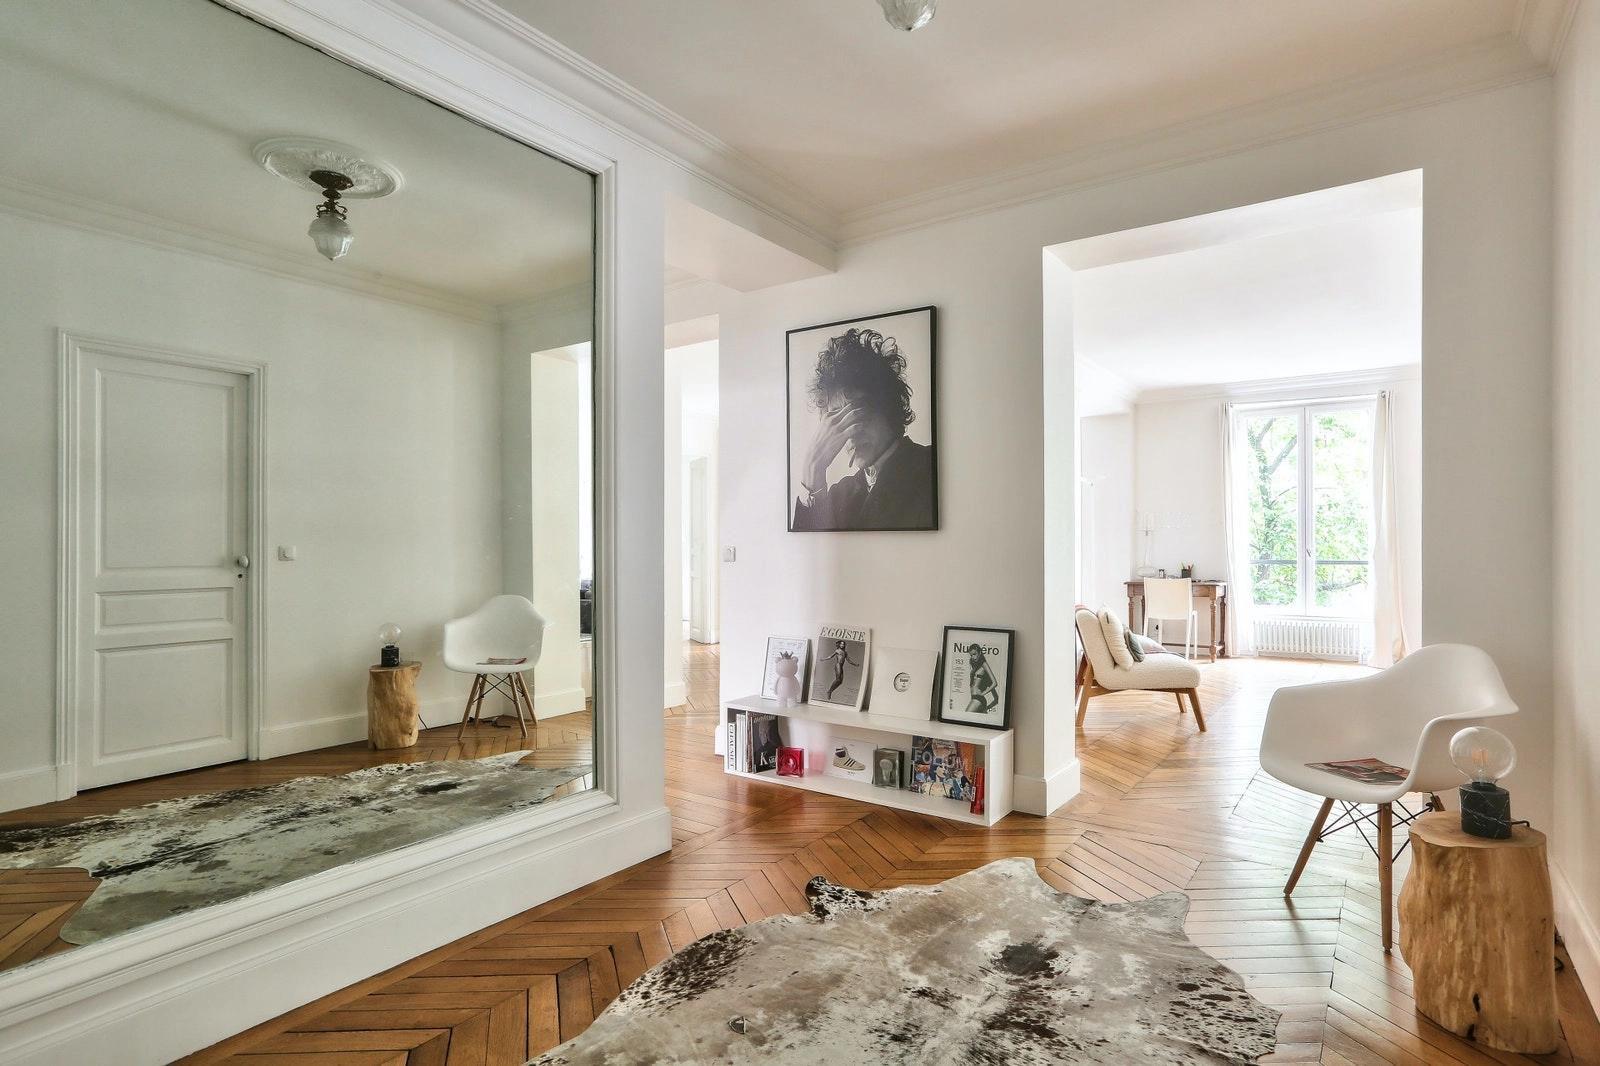 Sala dentro Preciosa, luminosa y cálida casa contemporánea de estilo Haussmann - 0